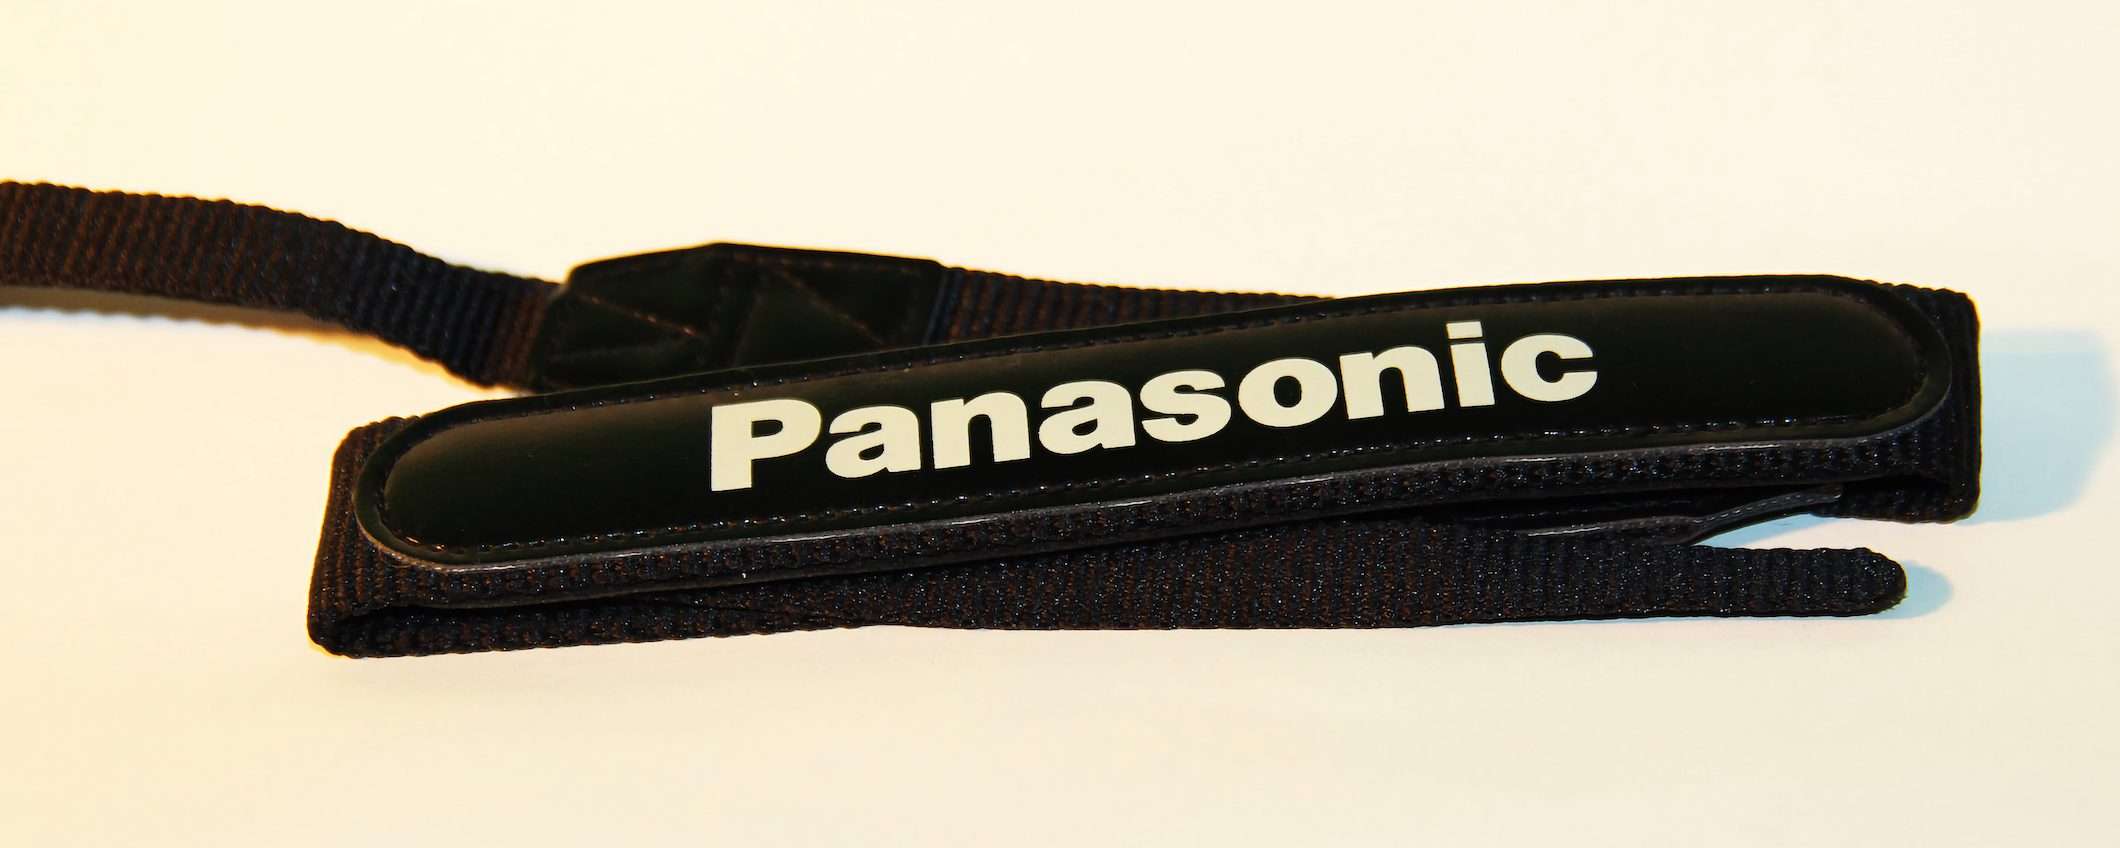 Panasonic, attacco cracker nei sistemi interni